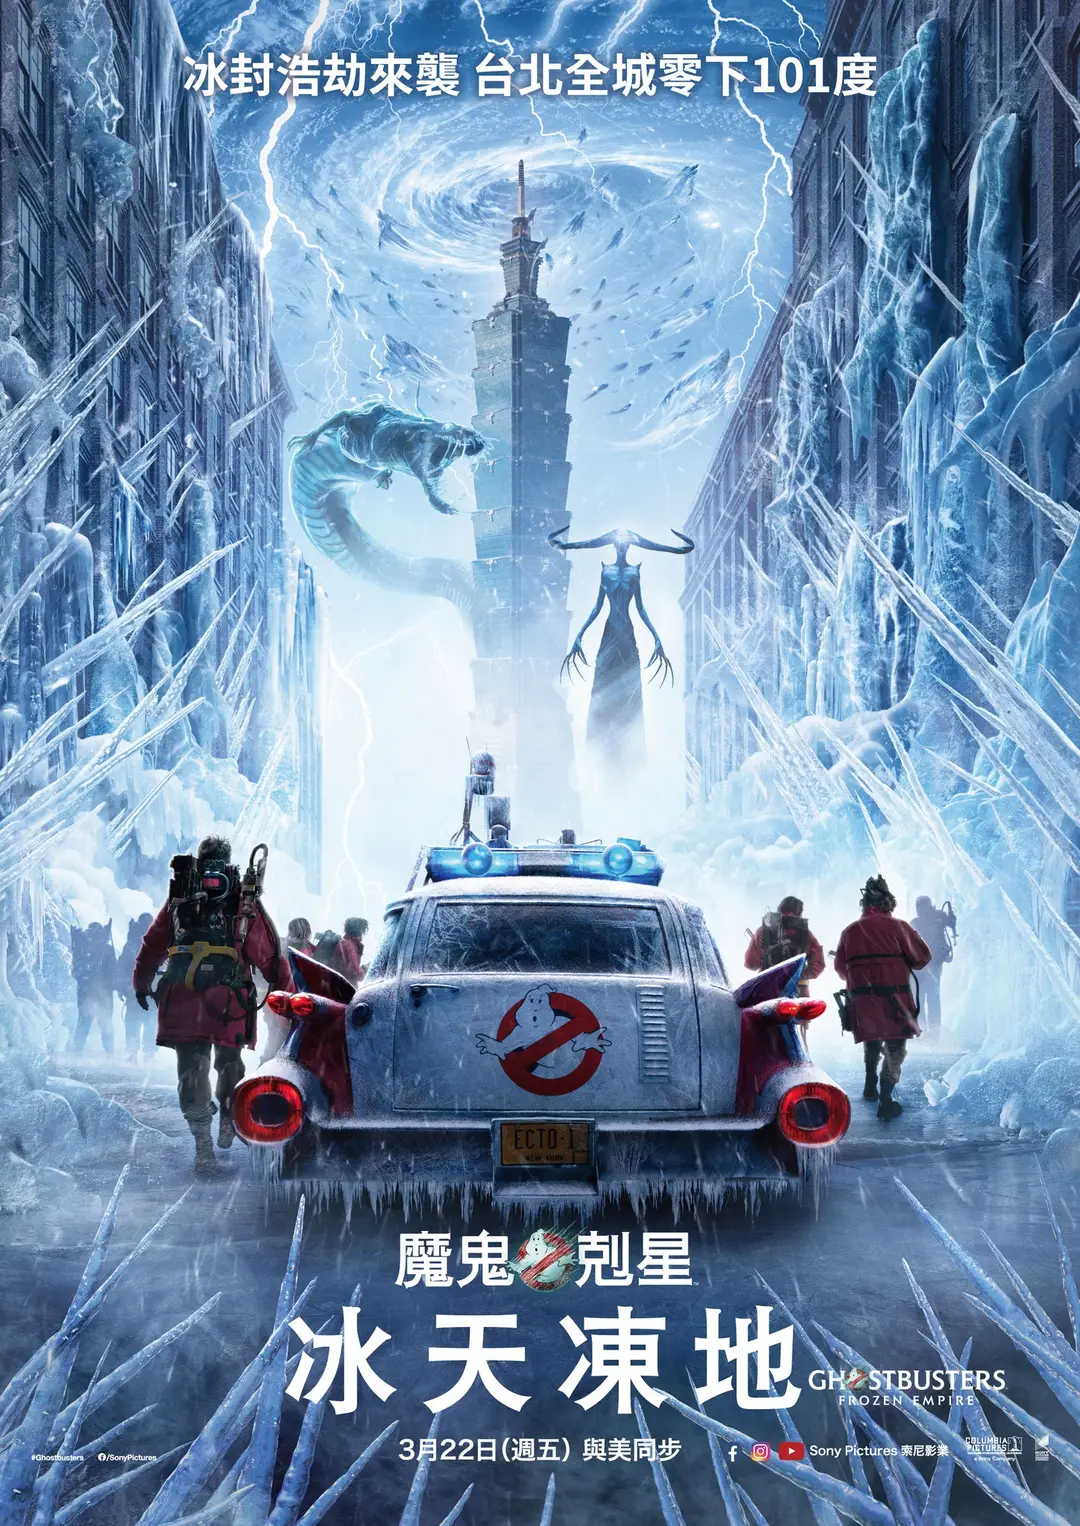 魔鬼剋星：冰天凍地 Ghostbusters Frozen Empire